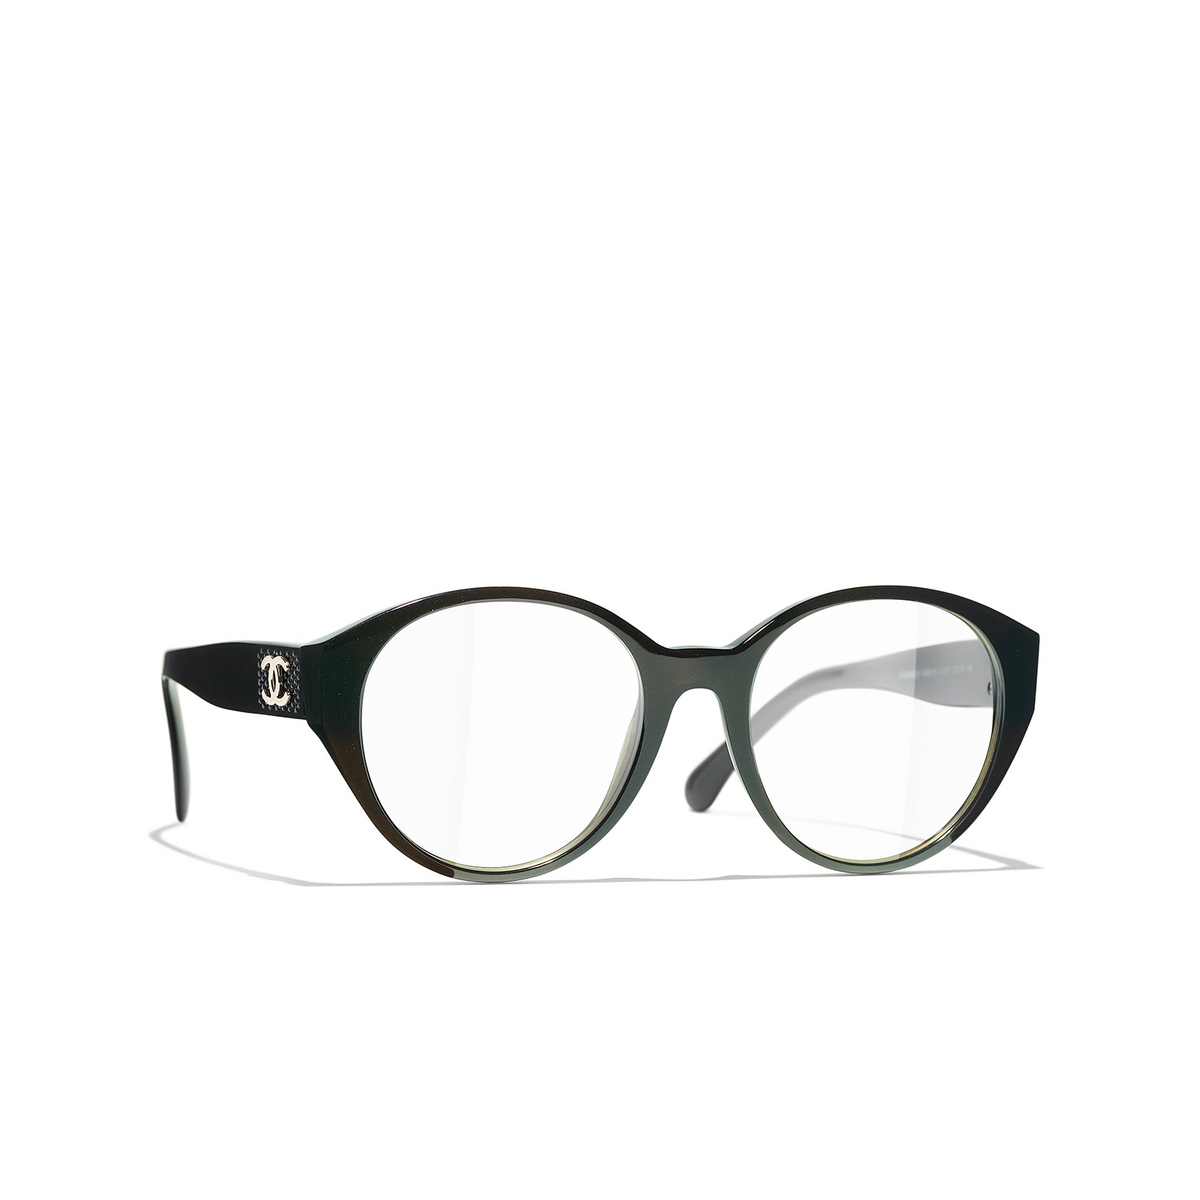 CHANEL round Eyeglasses 1707 Green